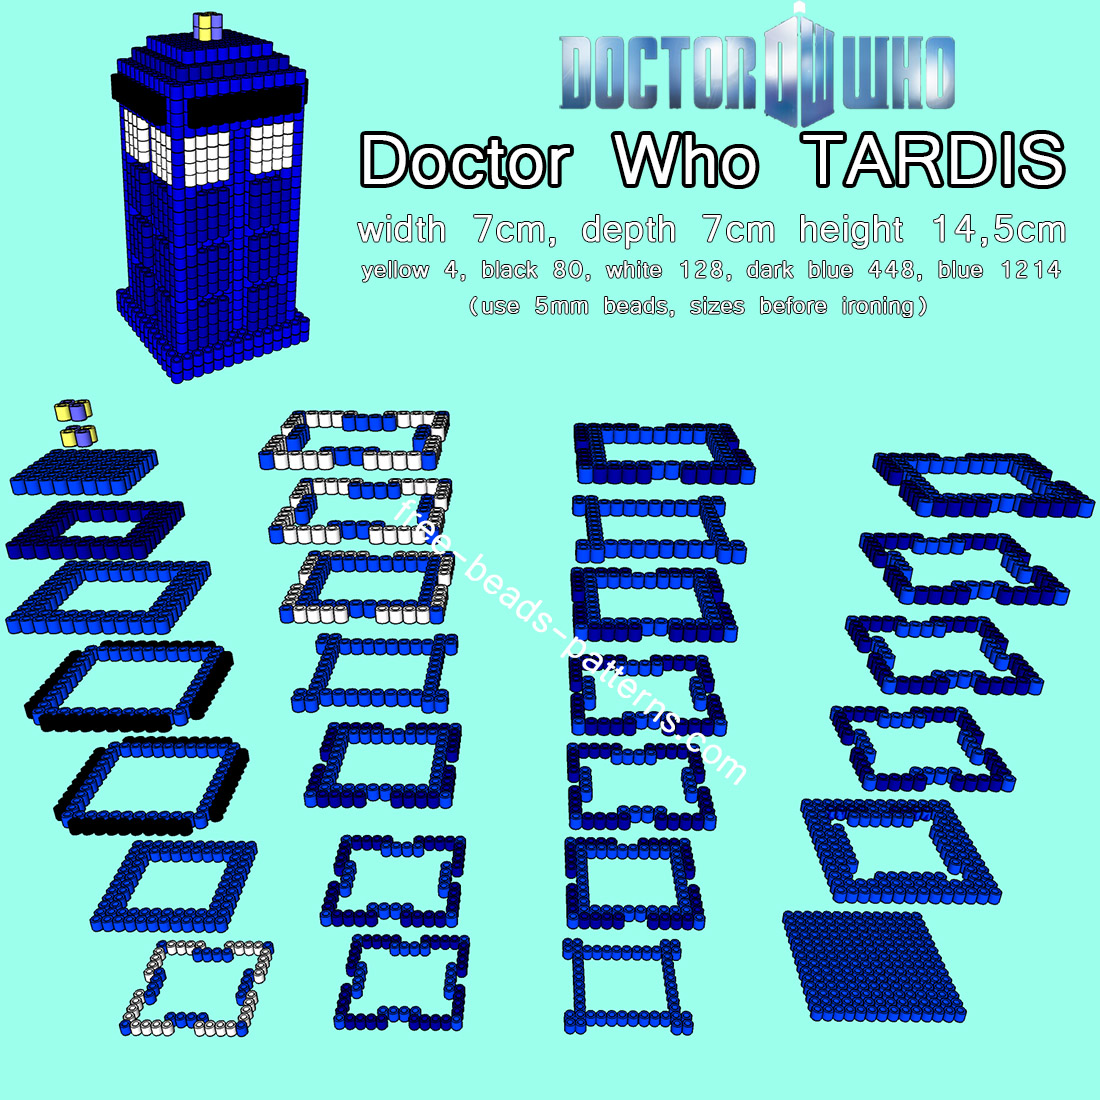 Doctor Who TARDIS 3D Hama beads Pyssla perler beads pattern